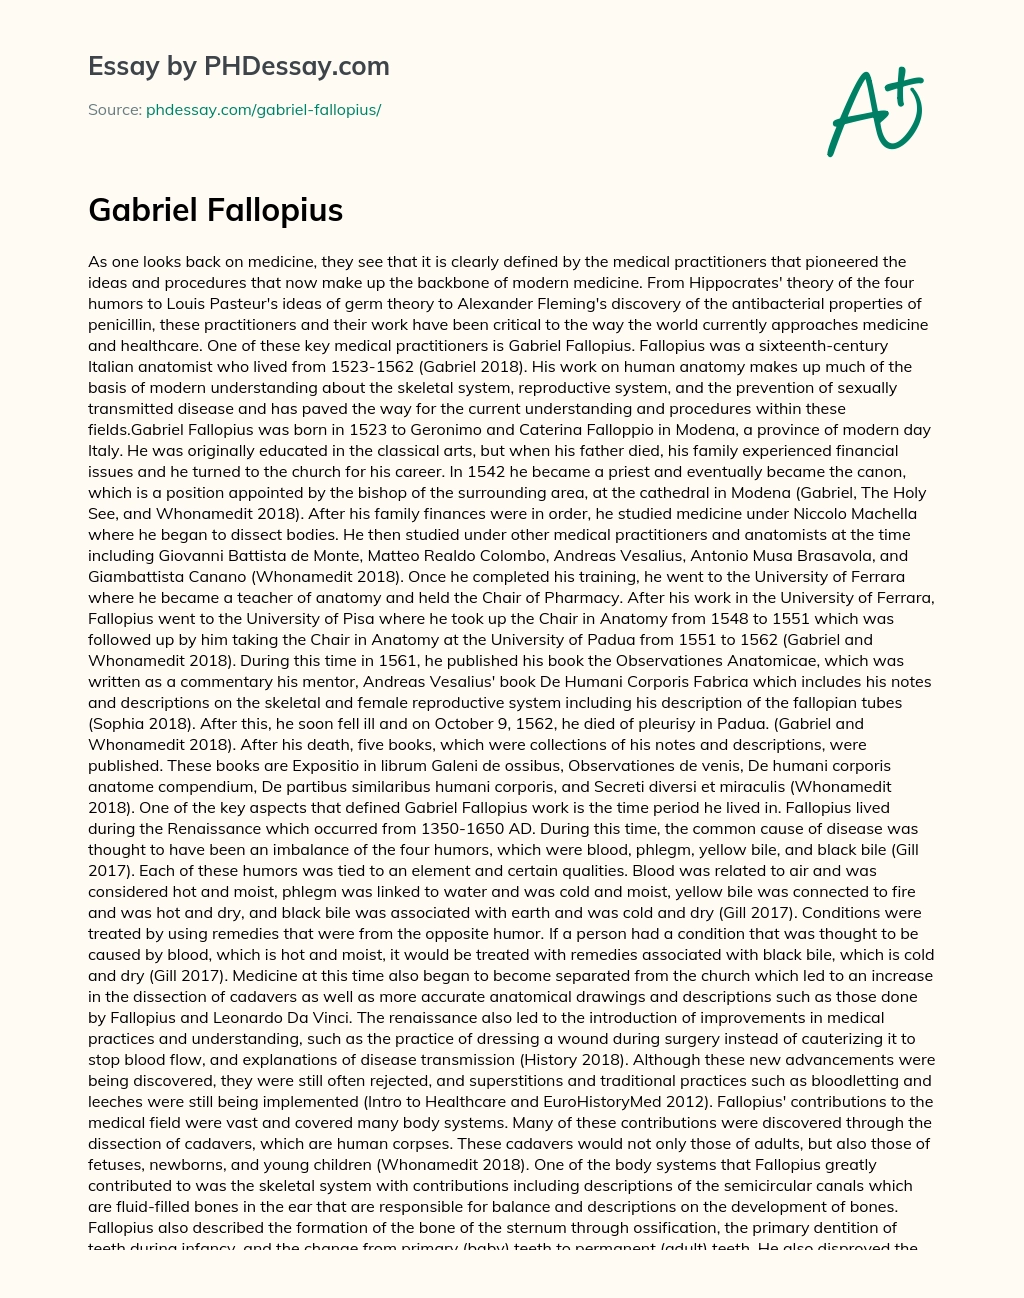 Gabriel Fallopius essay